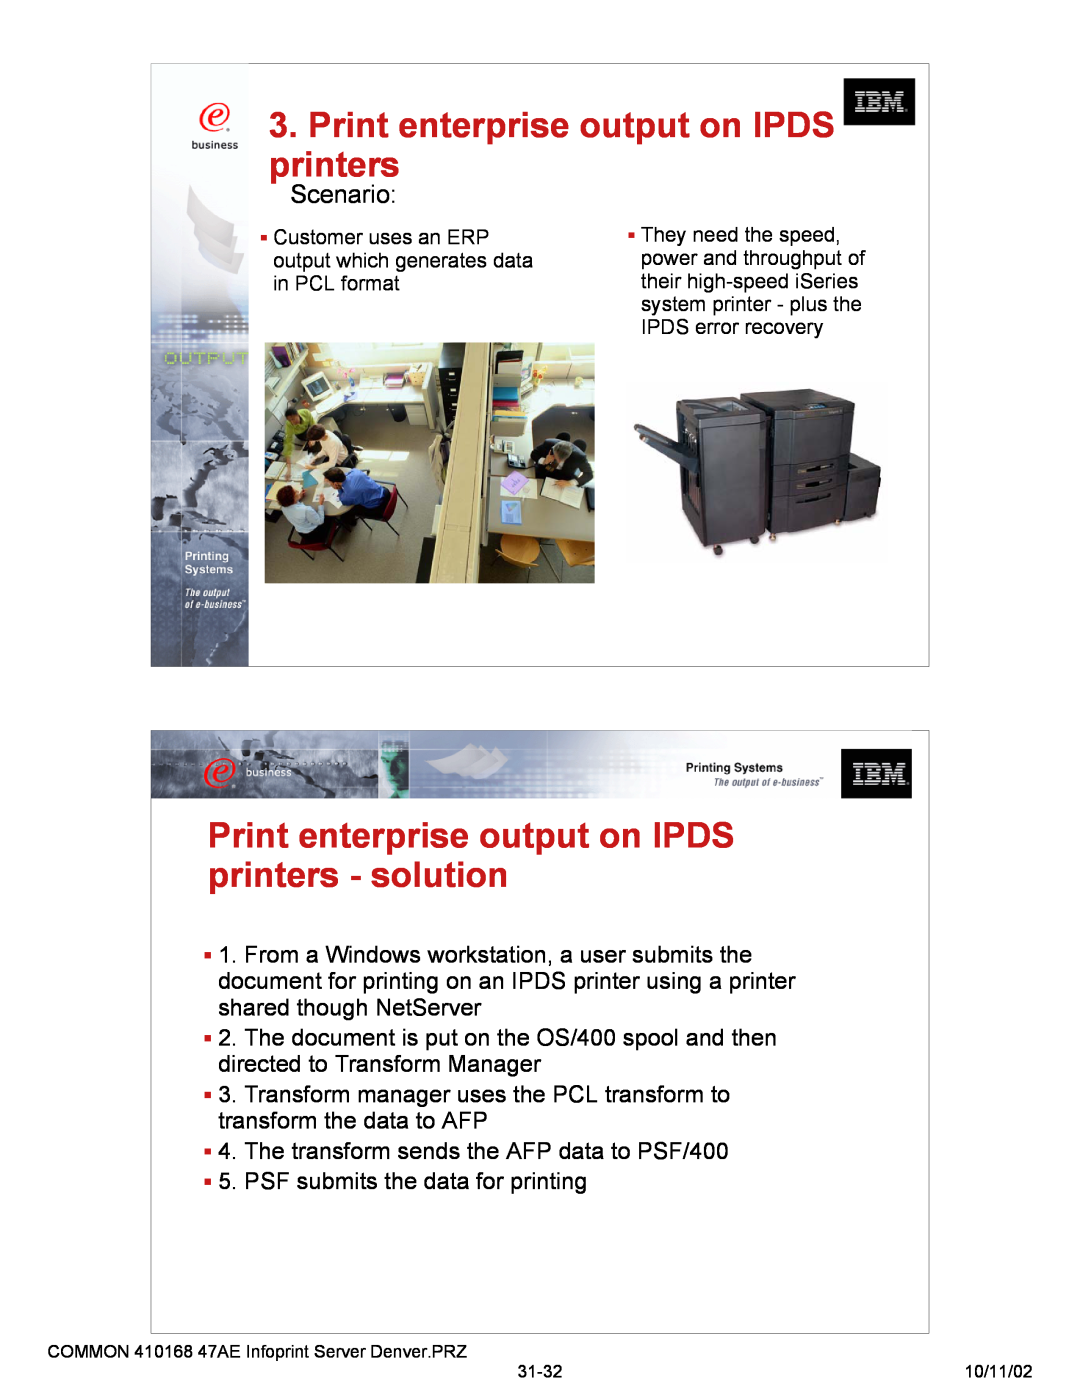 IBM 47AE - 410168 manual Print enterprise output on IPDS printers - solution, Scenario 